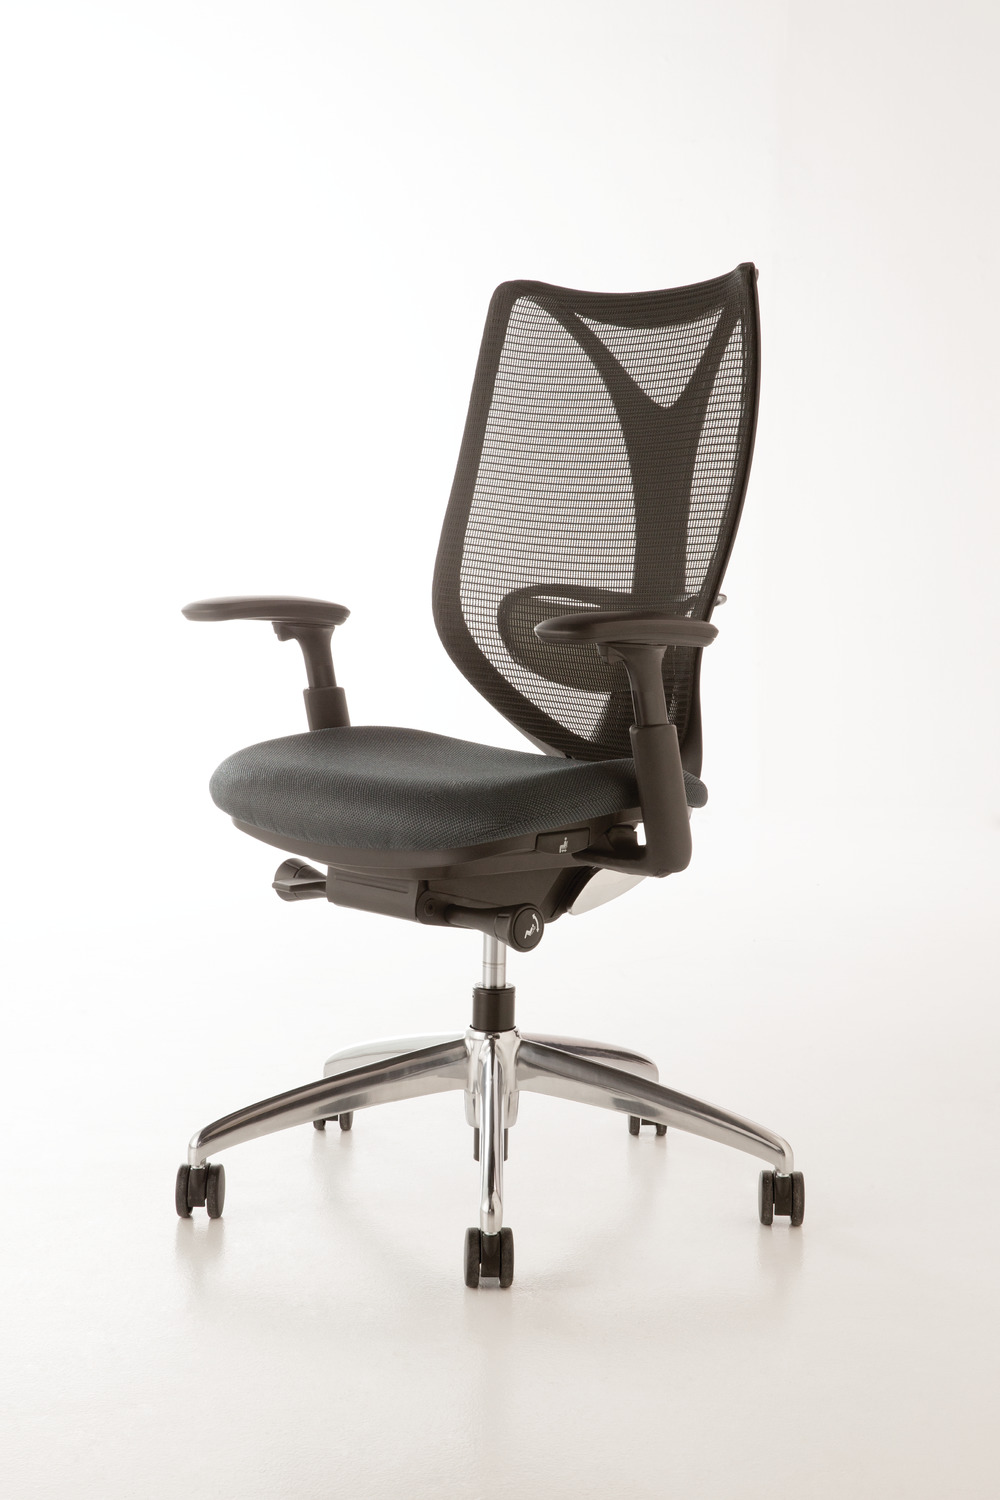 Low-Sabrina-Task-Chair-3-4-View-Left-Iron-Mesh-Ebony-Frame-Polished-Aluminum-Base-Height-Adjustable-Lumbar